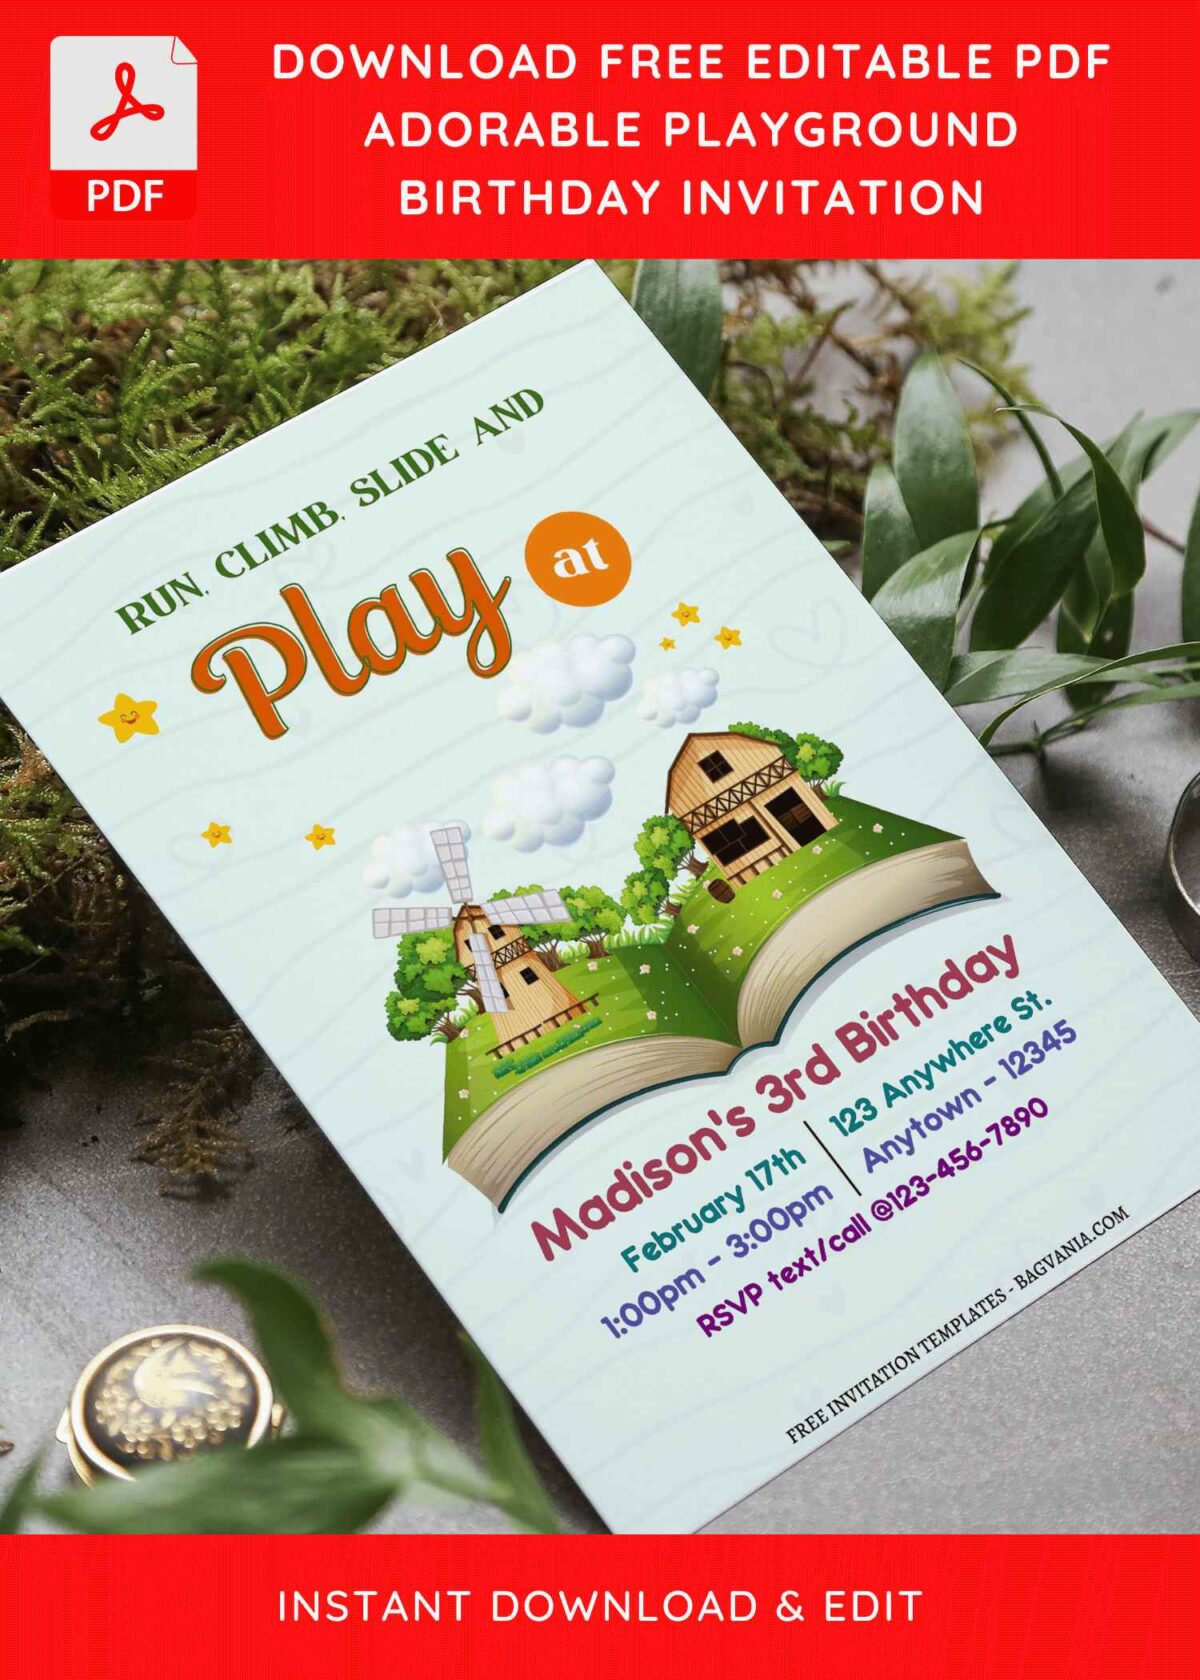 (Free Editable PDF) Fun Outdoor Playground Birthday Invitation Templates F